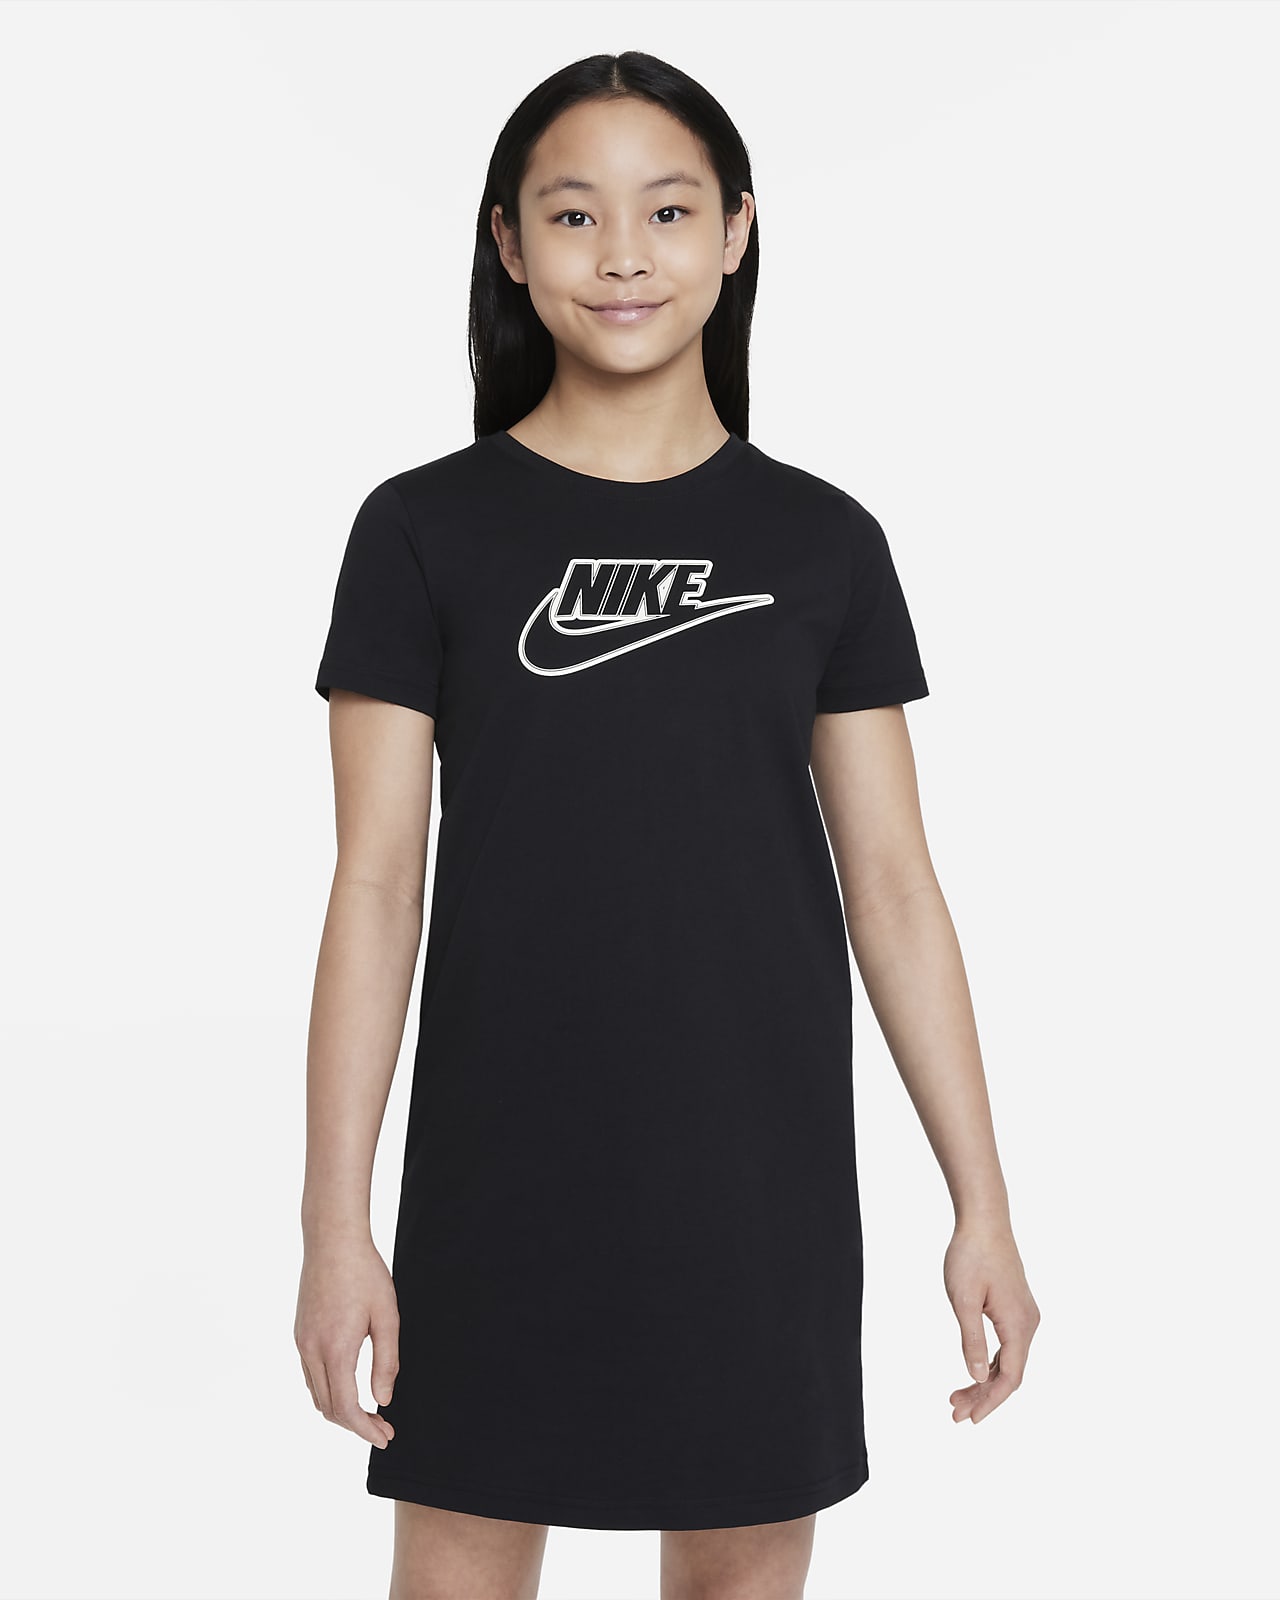 Nike Sportswear Big (Girls') T-Shirt Nike.com